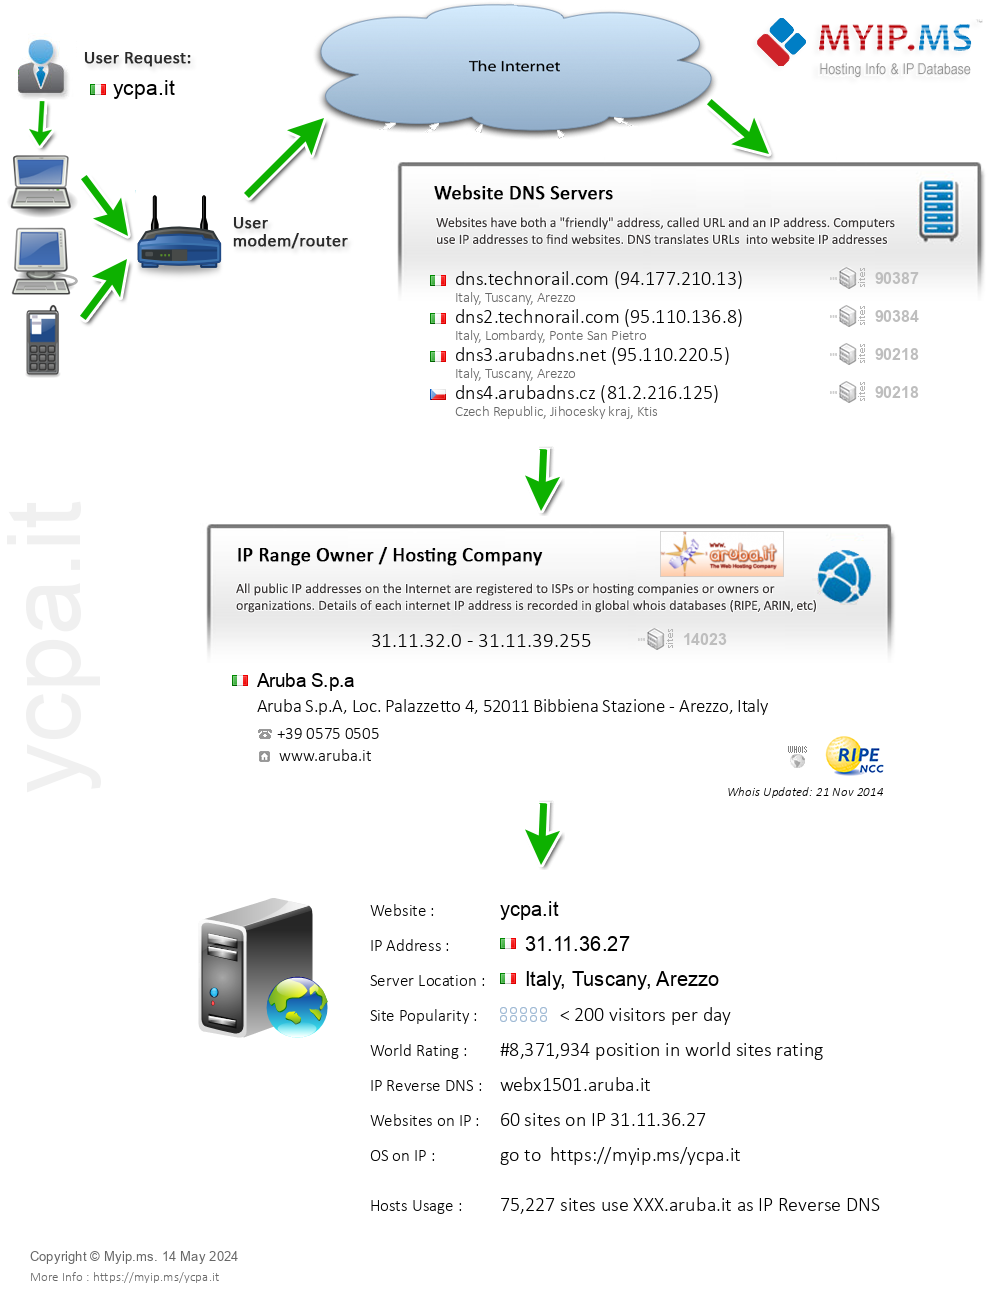 Ycpa.it - Website Hosting Visual IP Diagram